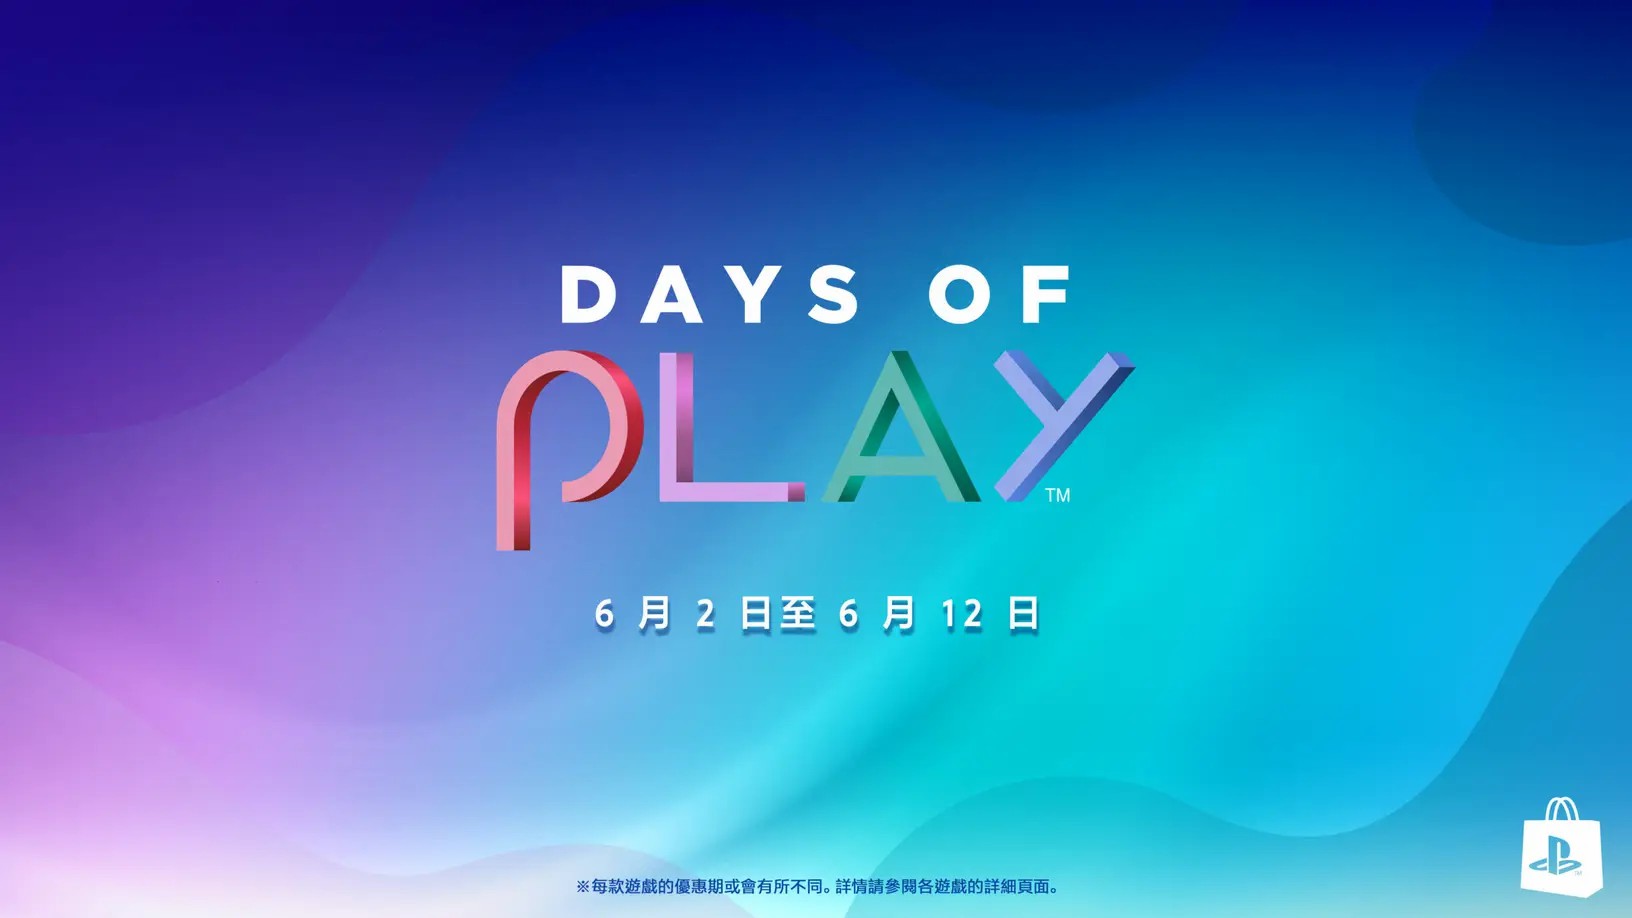 PS年中大促「DAYS OF PLAY」正式開啟 會員75折優惠